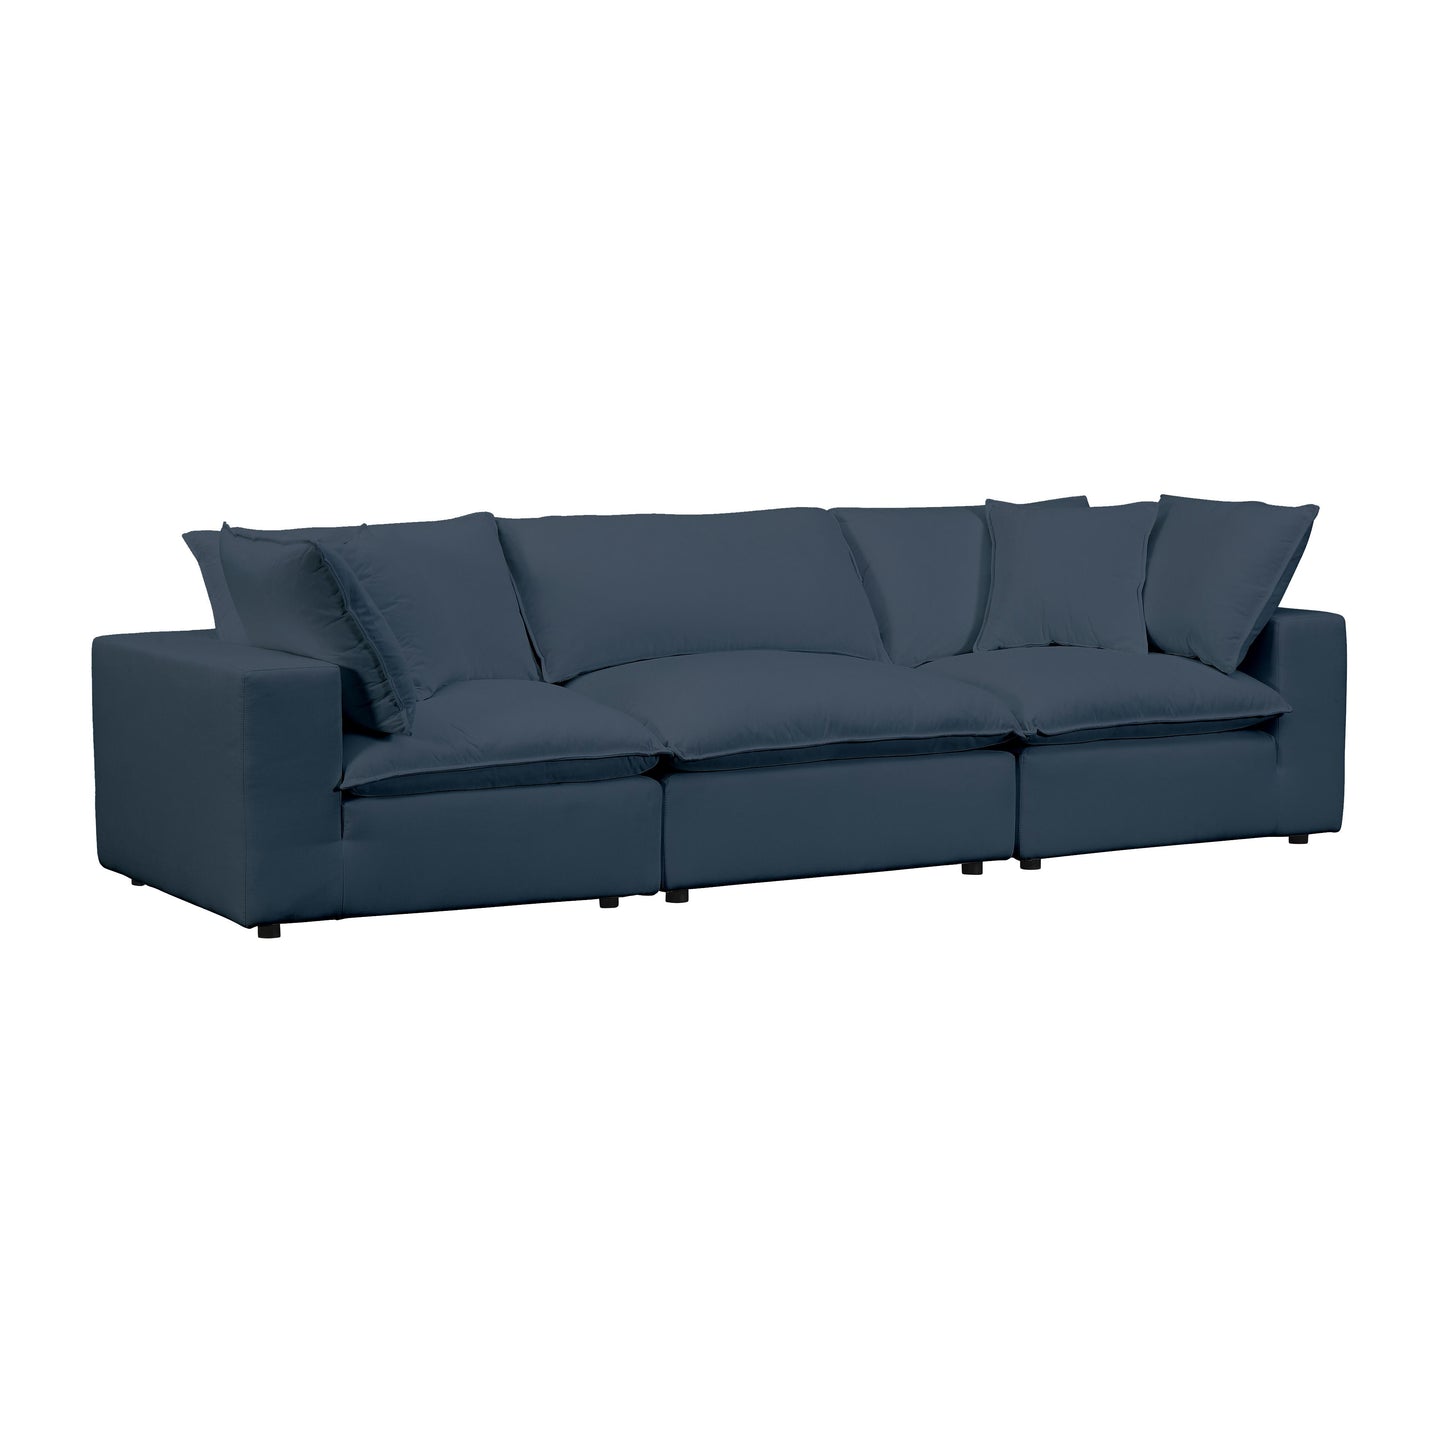 Tov Furniture Cali Navy Modular Sofa